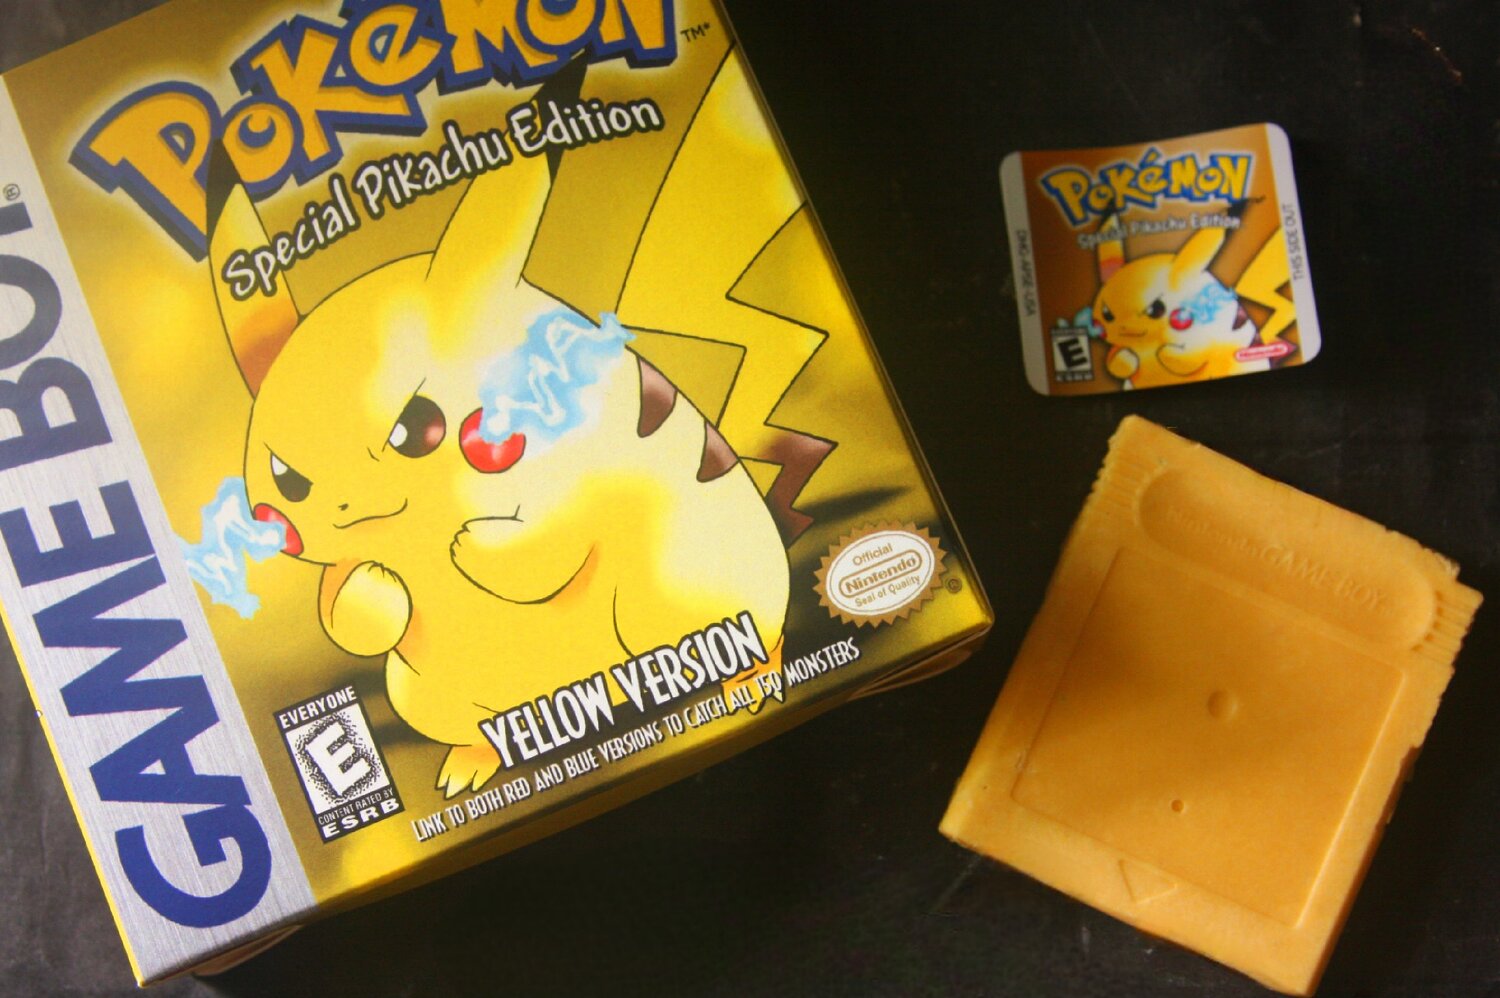 Pokemon Yellow Pikachu Edition for Original Gameboy